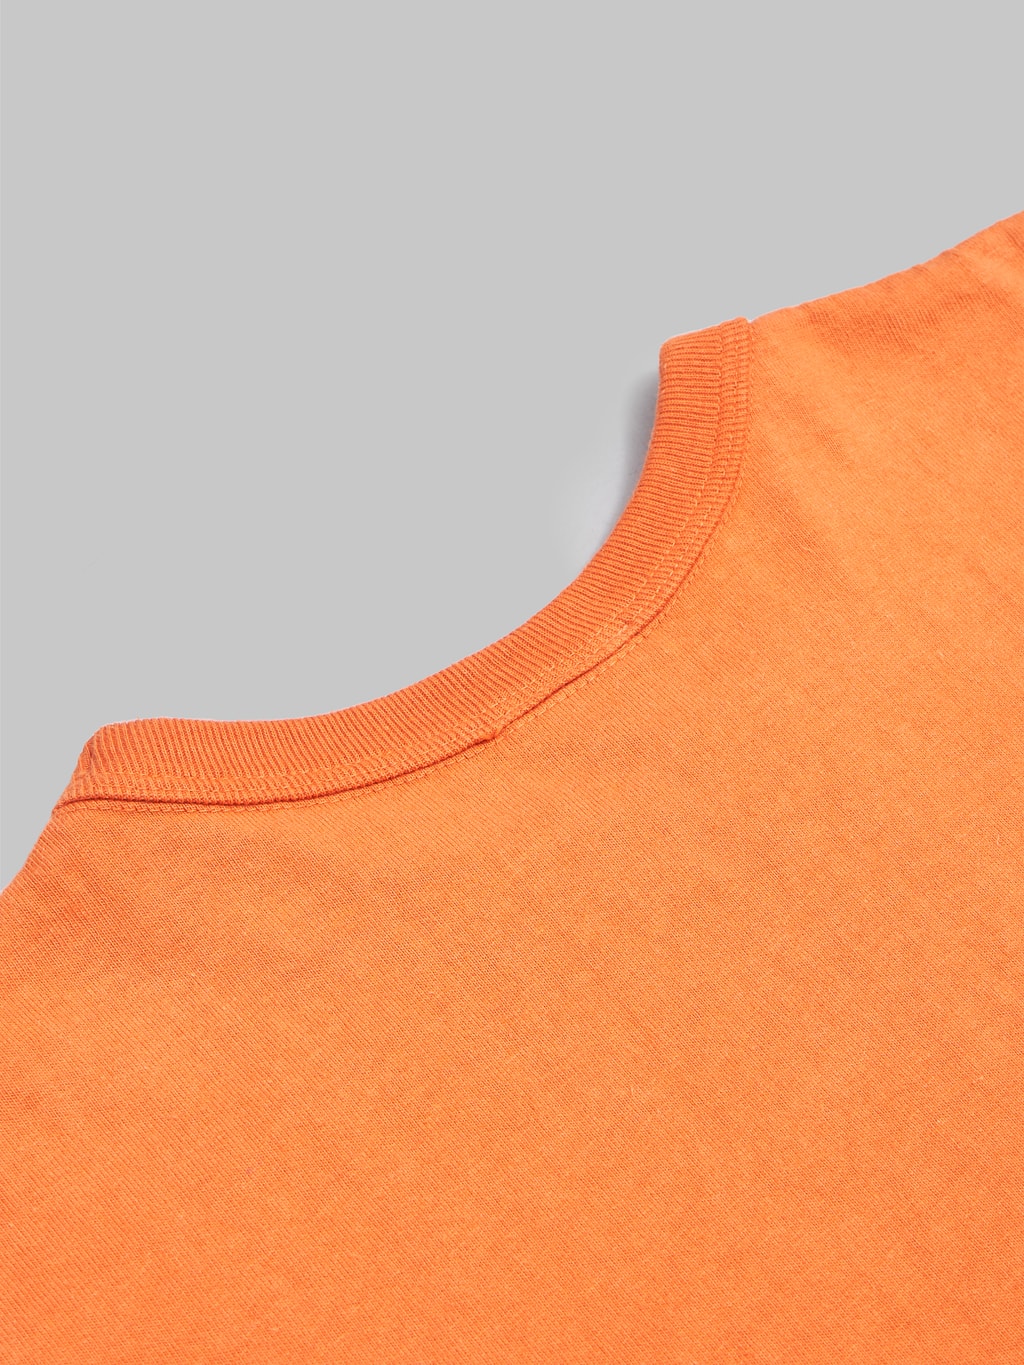 Samurai jeans solid plain heavyweight tshirt orange collar stitching